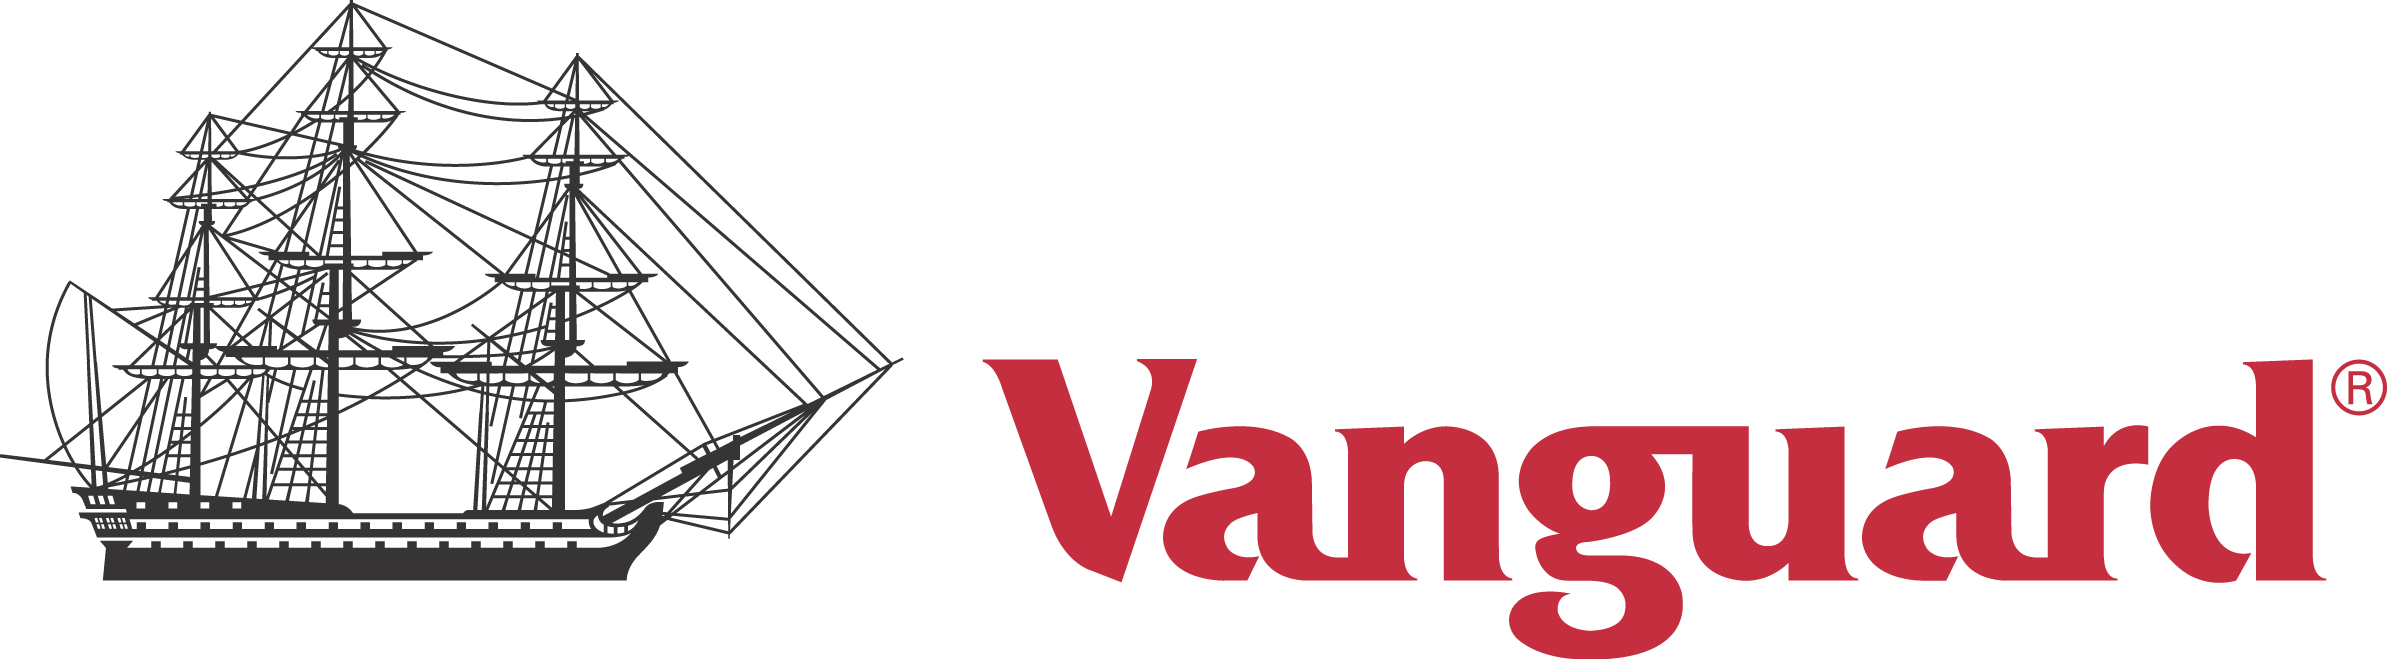 Infrastructure Design for Vanguard Logo